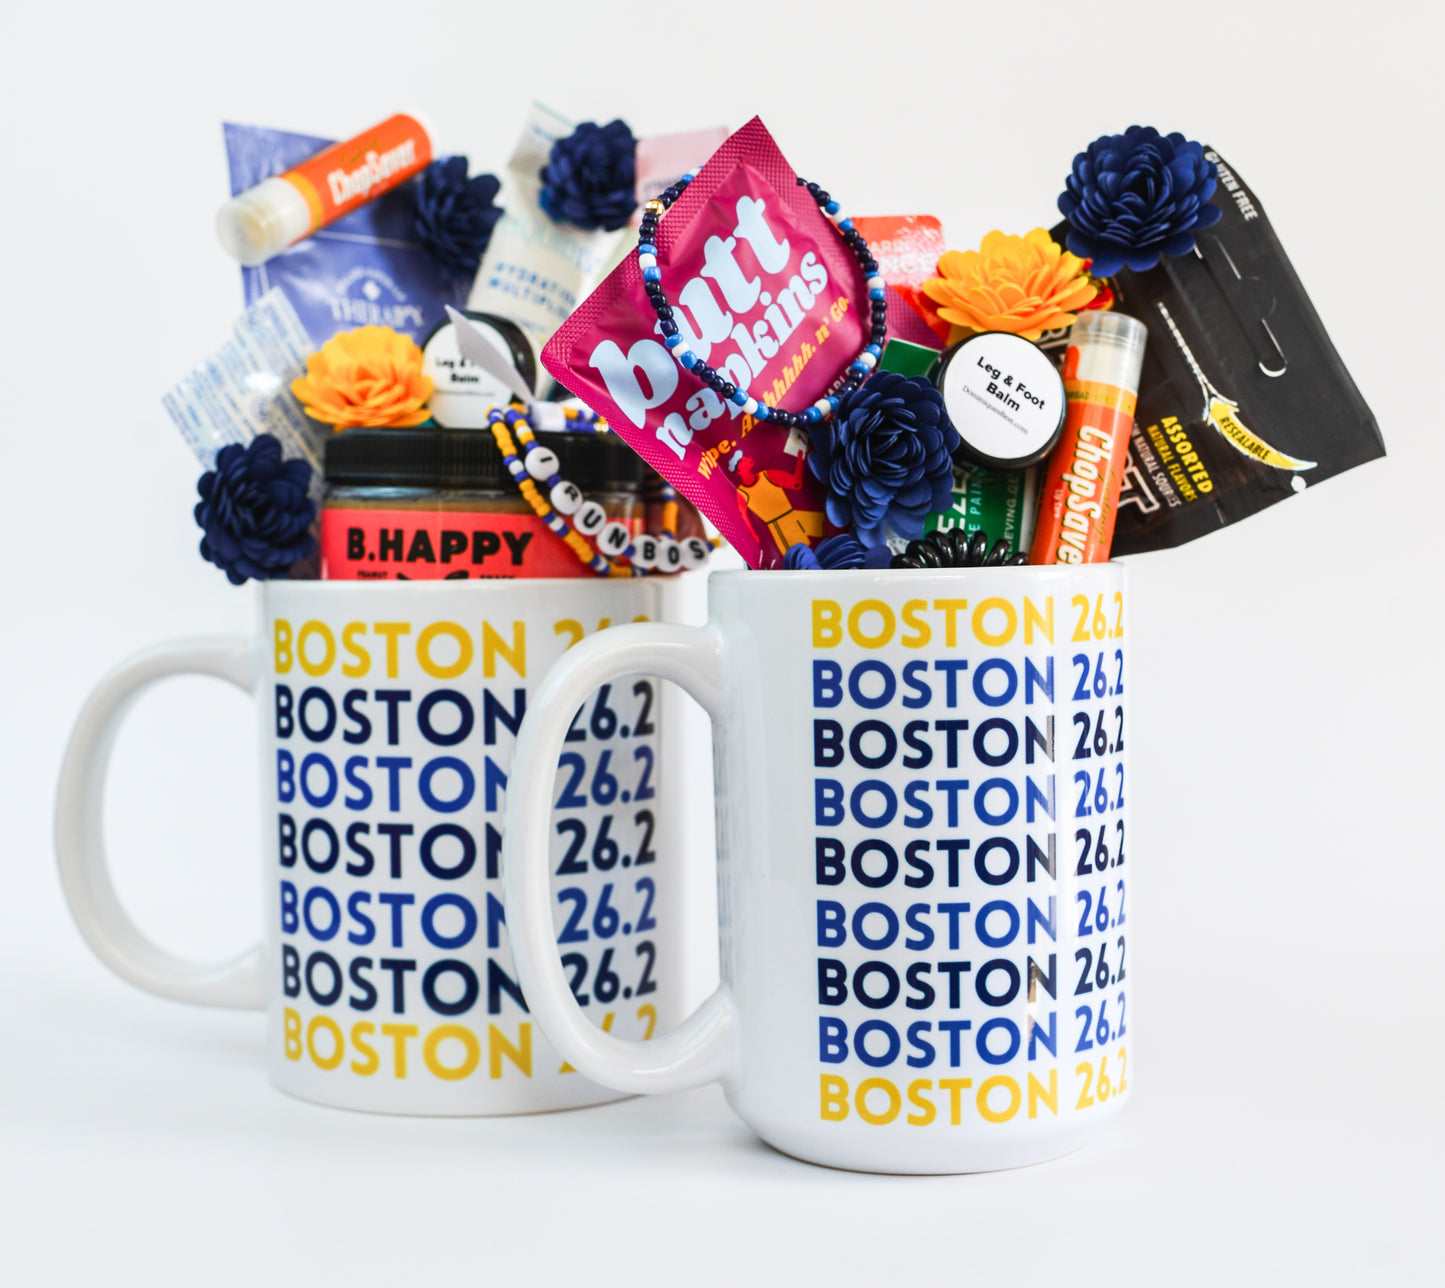 The Boston Bouquet & Mug